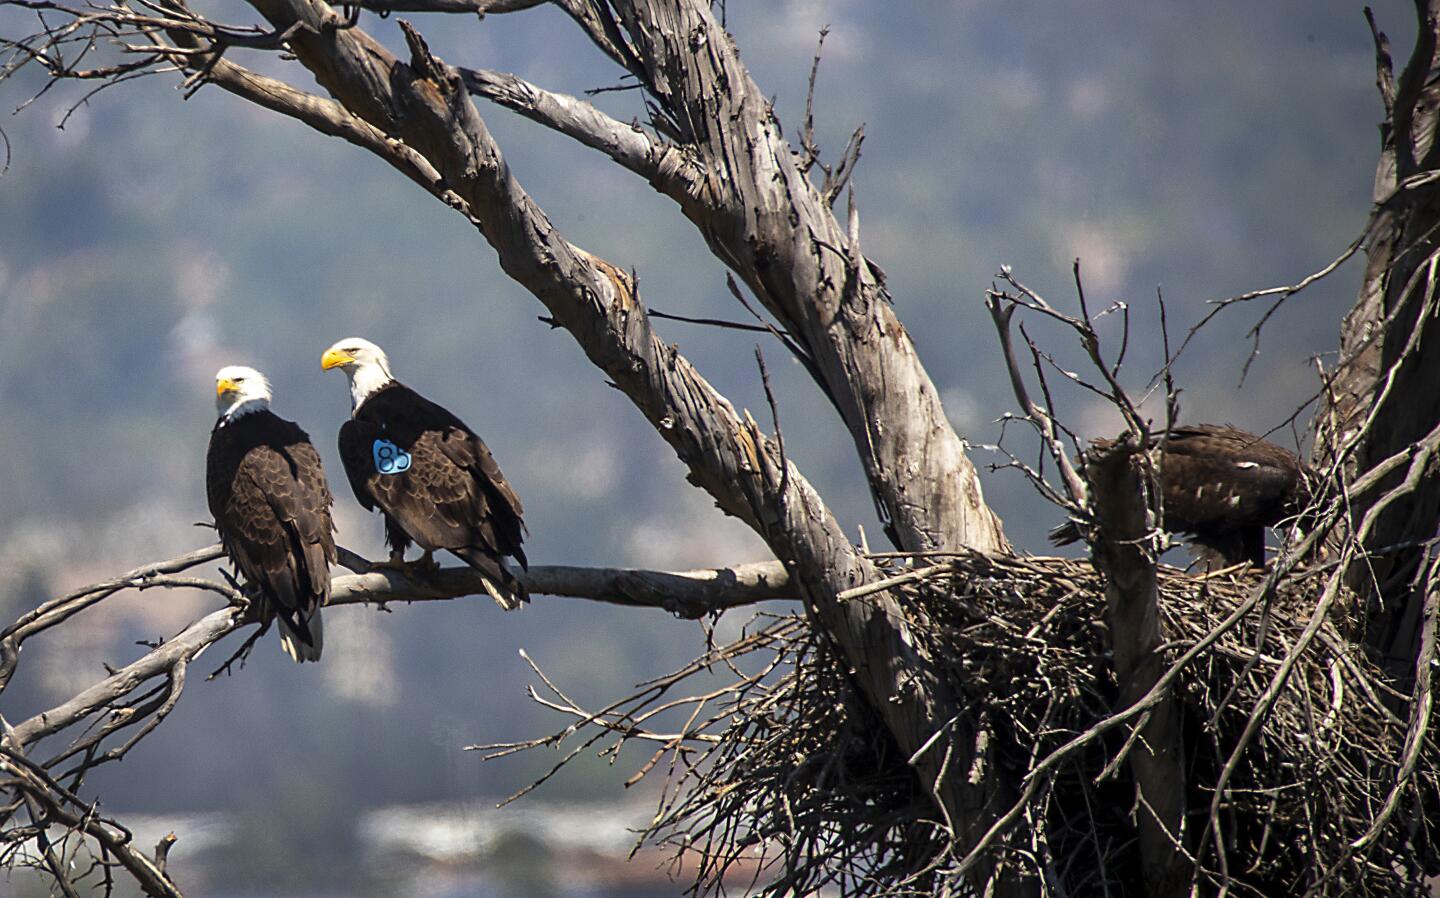 Bald eagles return to nest in Orange County neighborhood